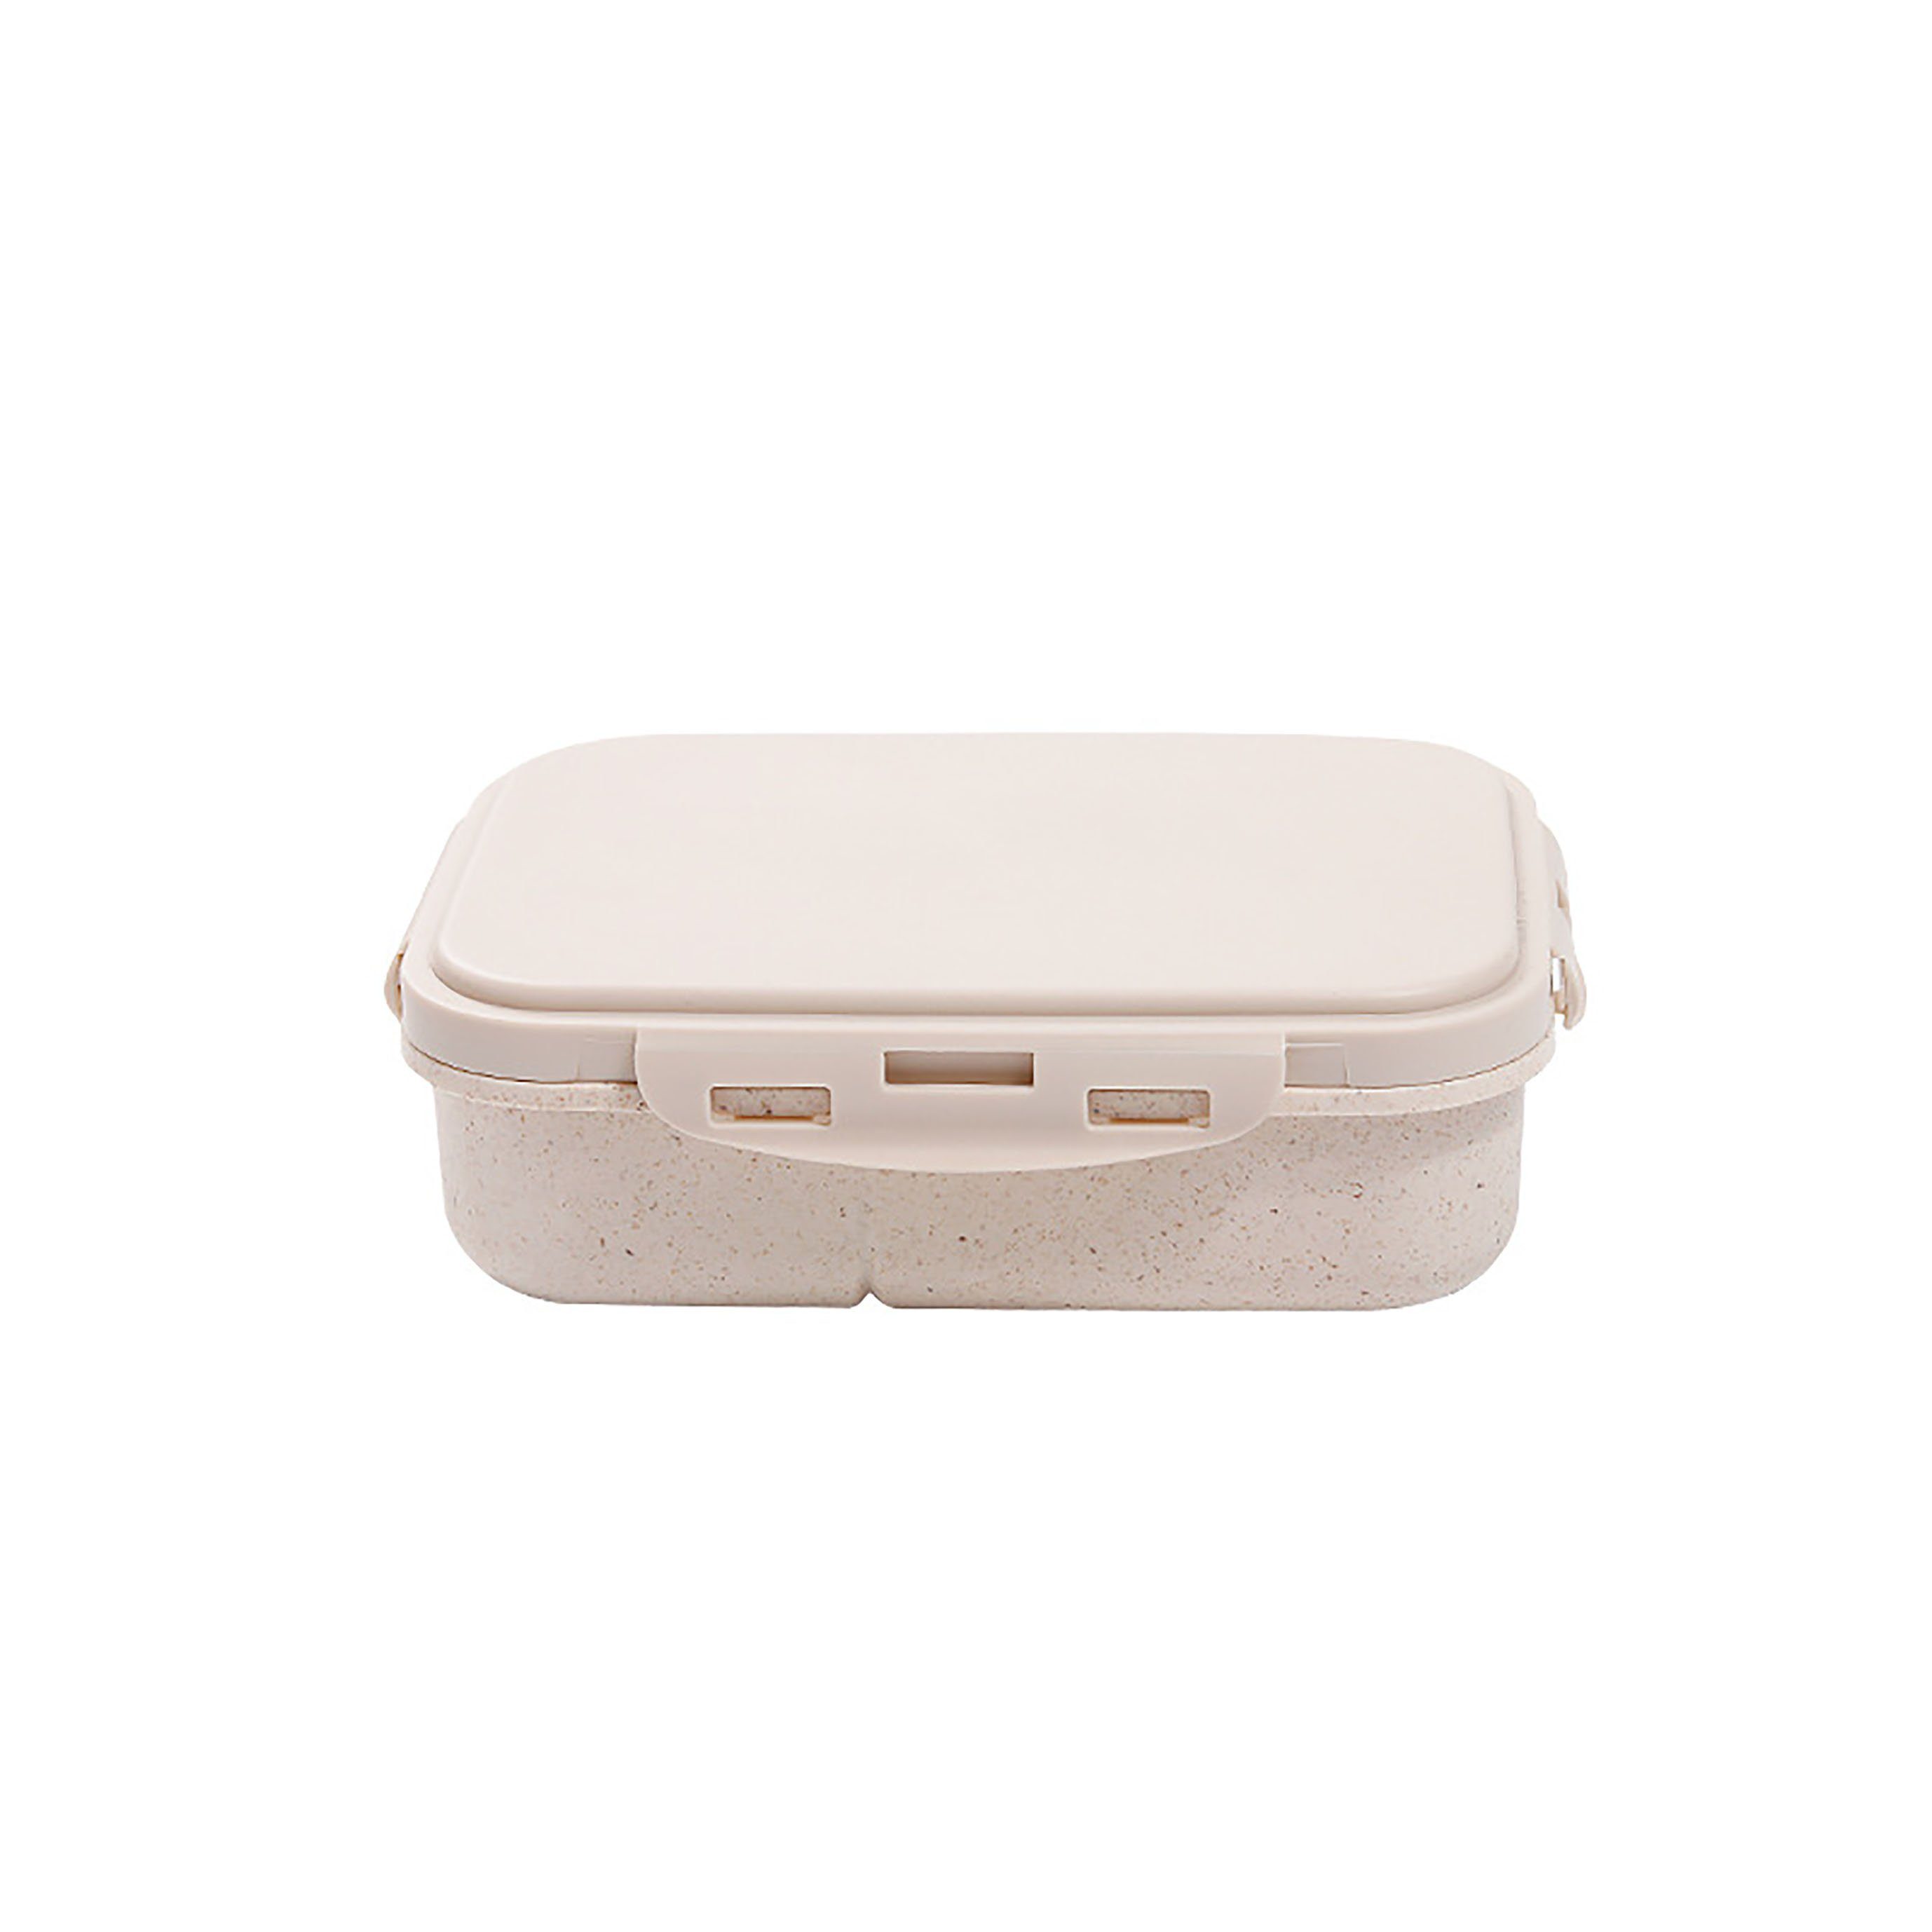 SRRINM Lunchbox Plastik Lunch Box Fach Bento Box | Lunchboxen